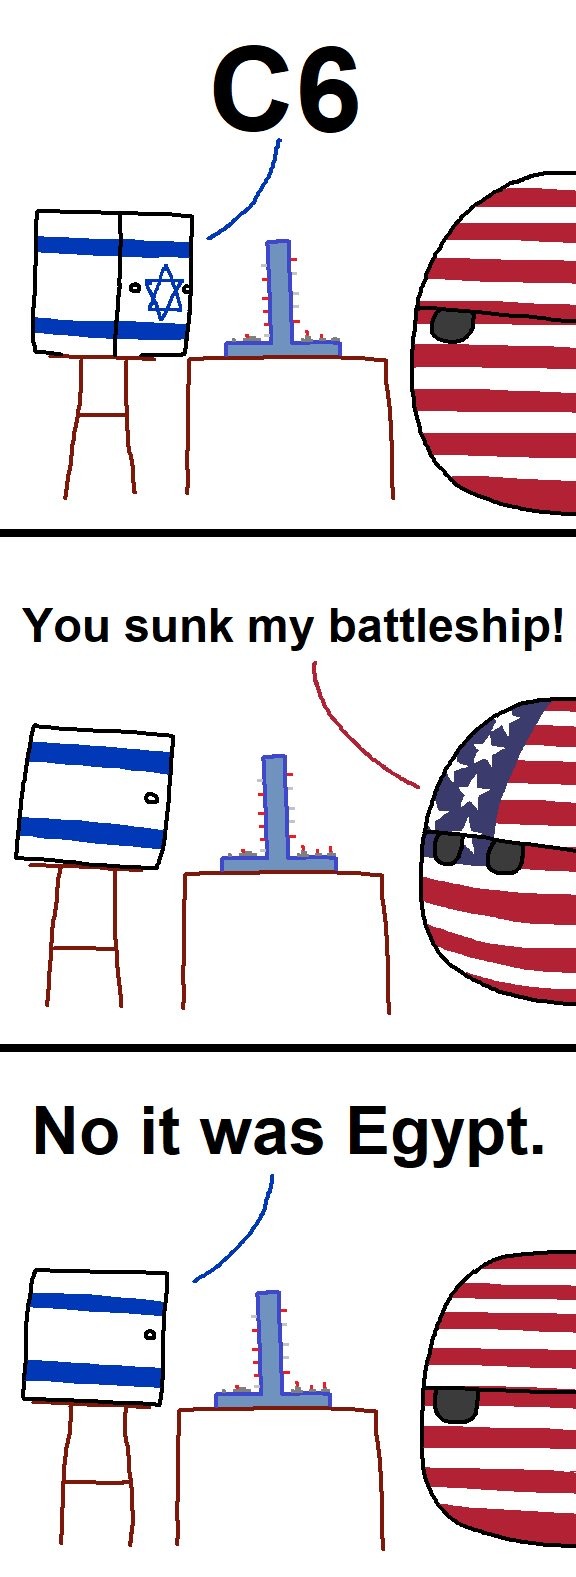 dongs in a battleship - meme